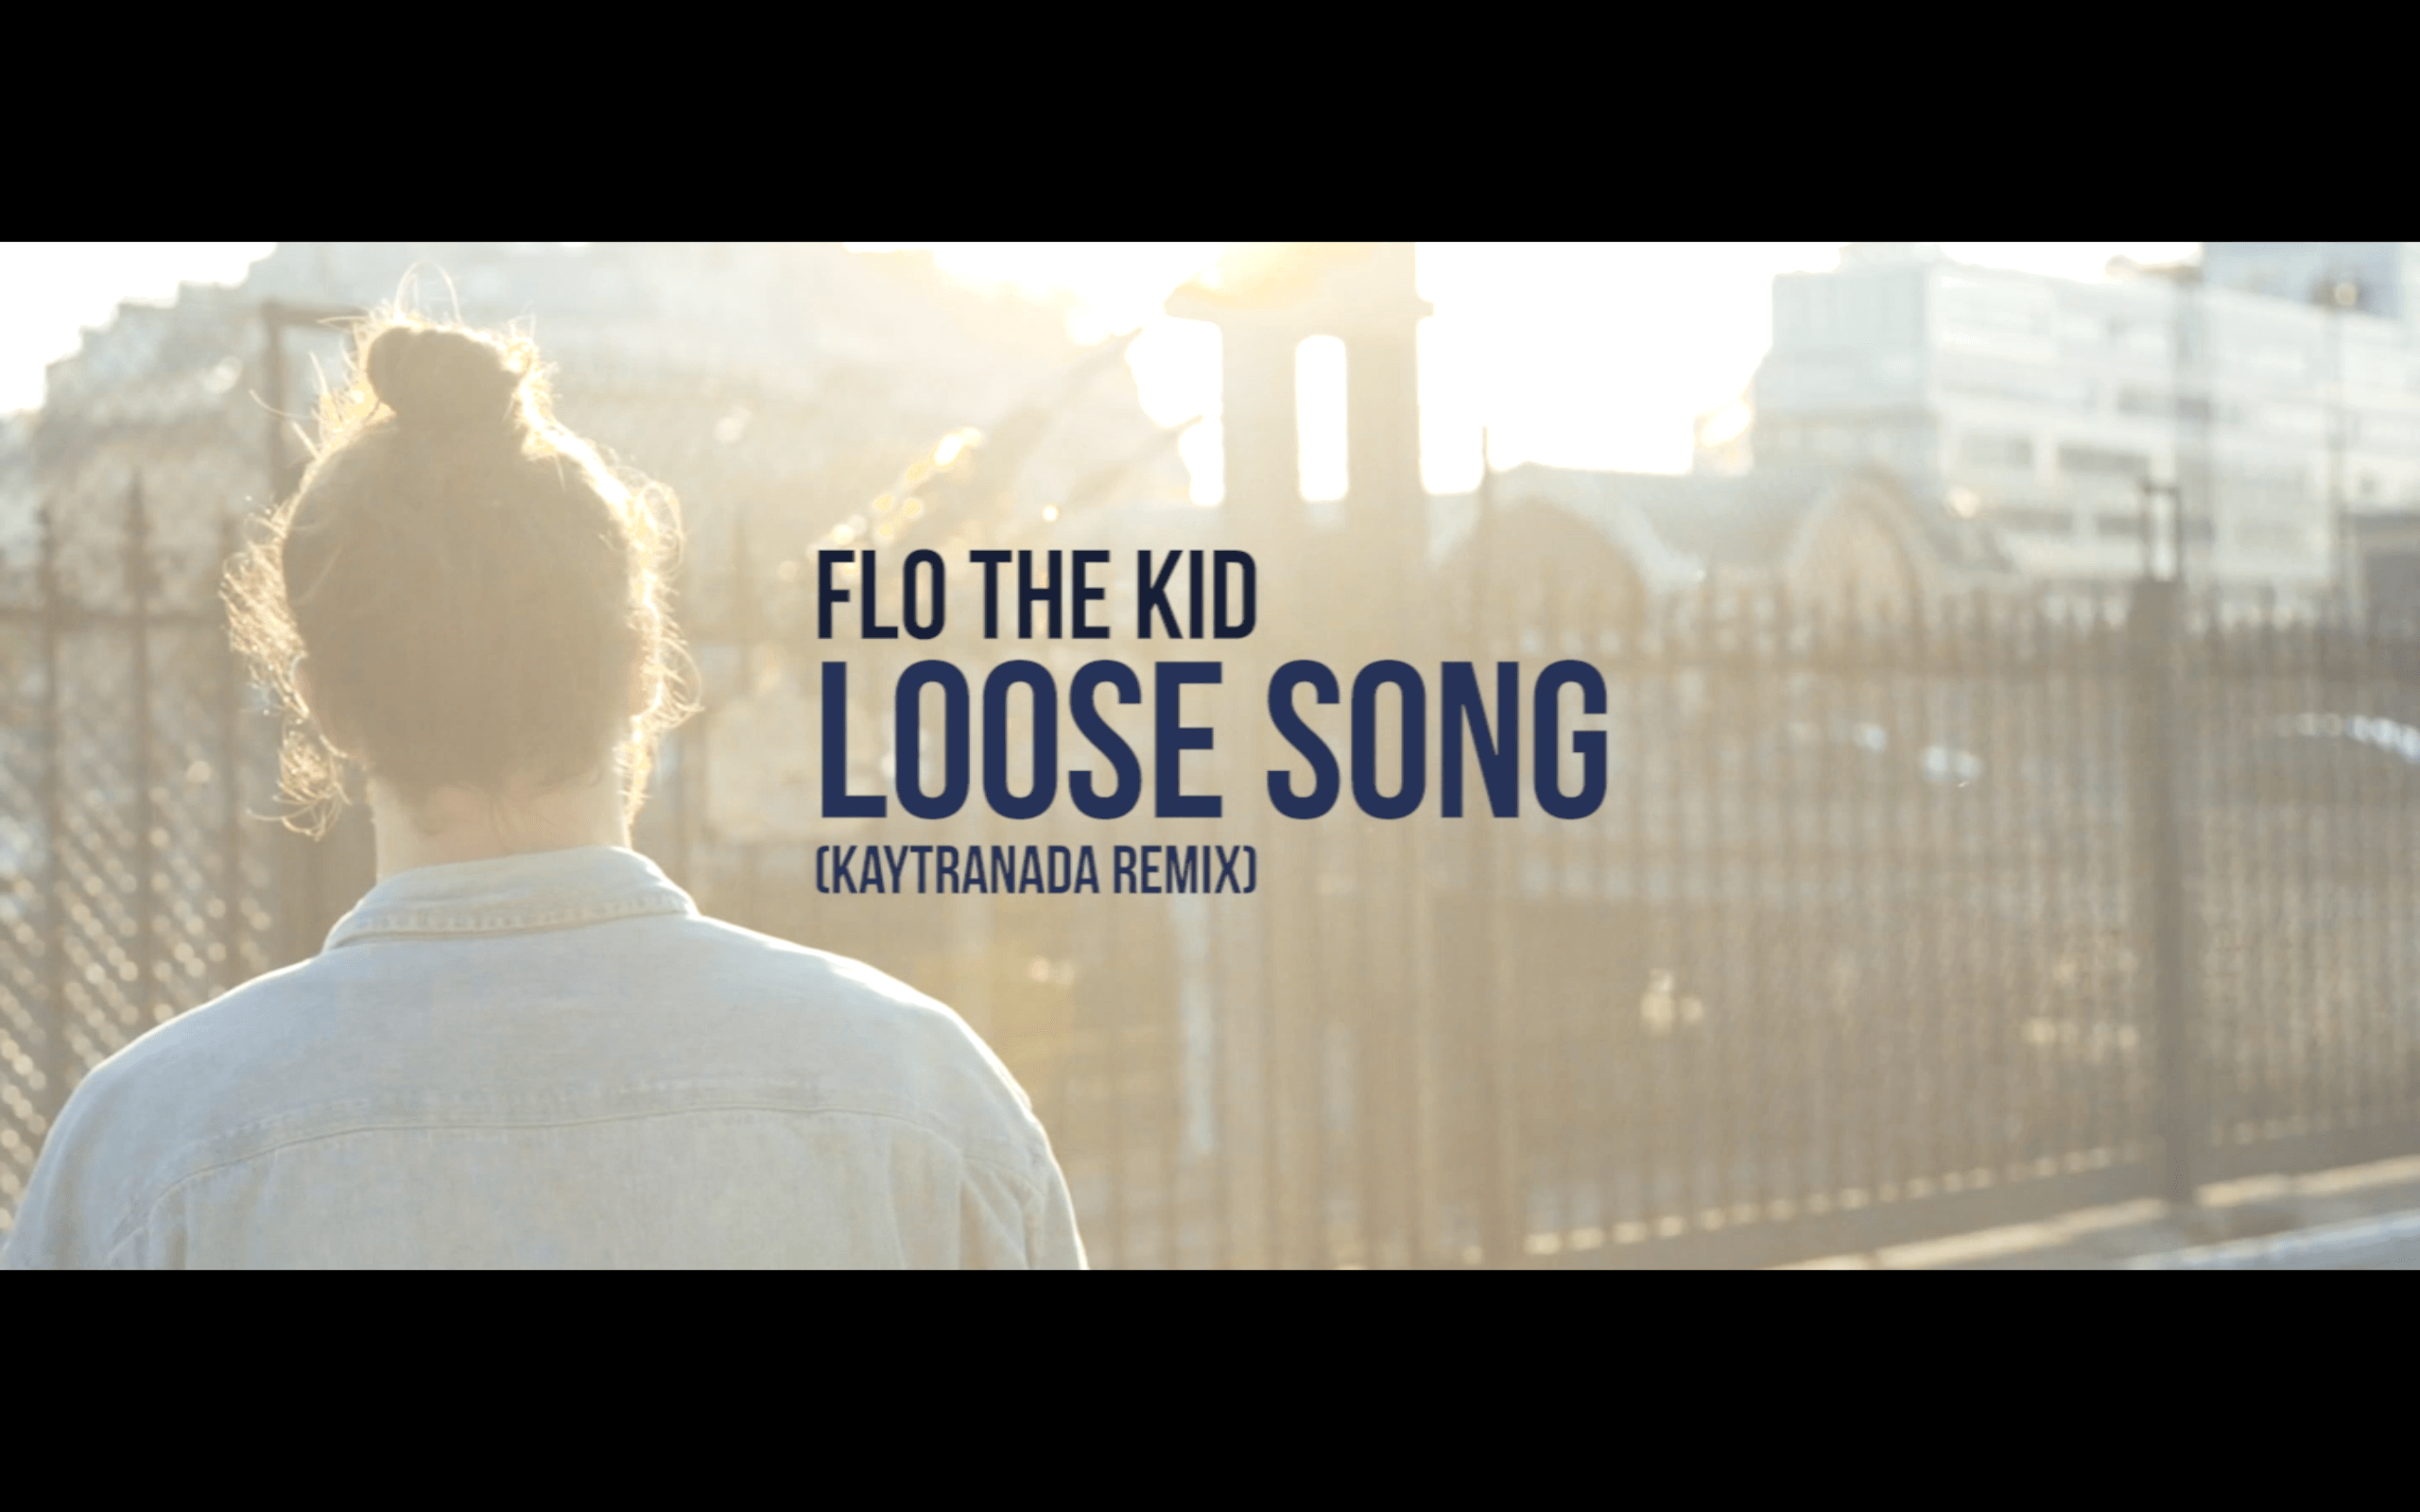 Flo the kid